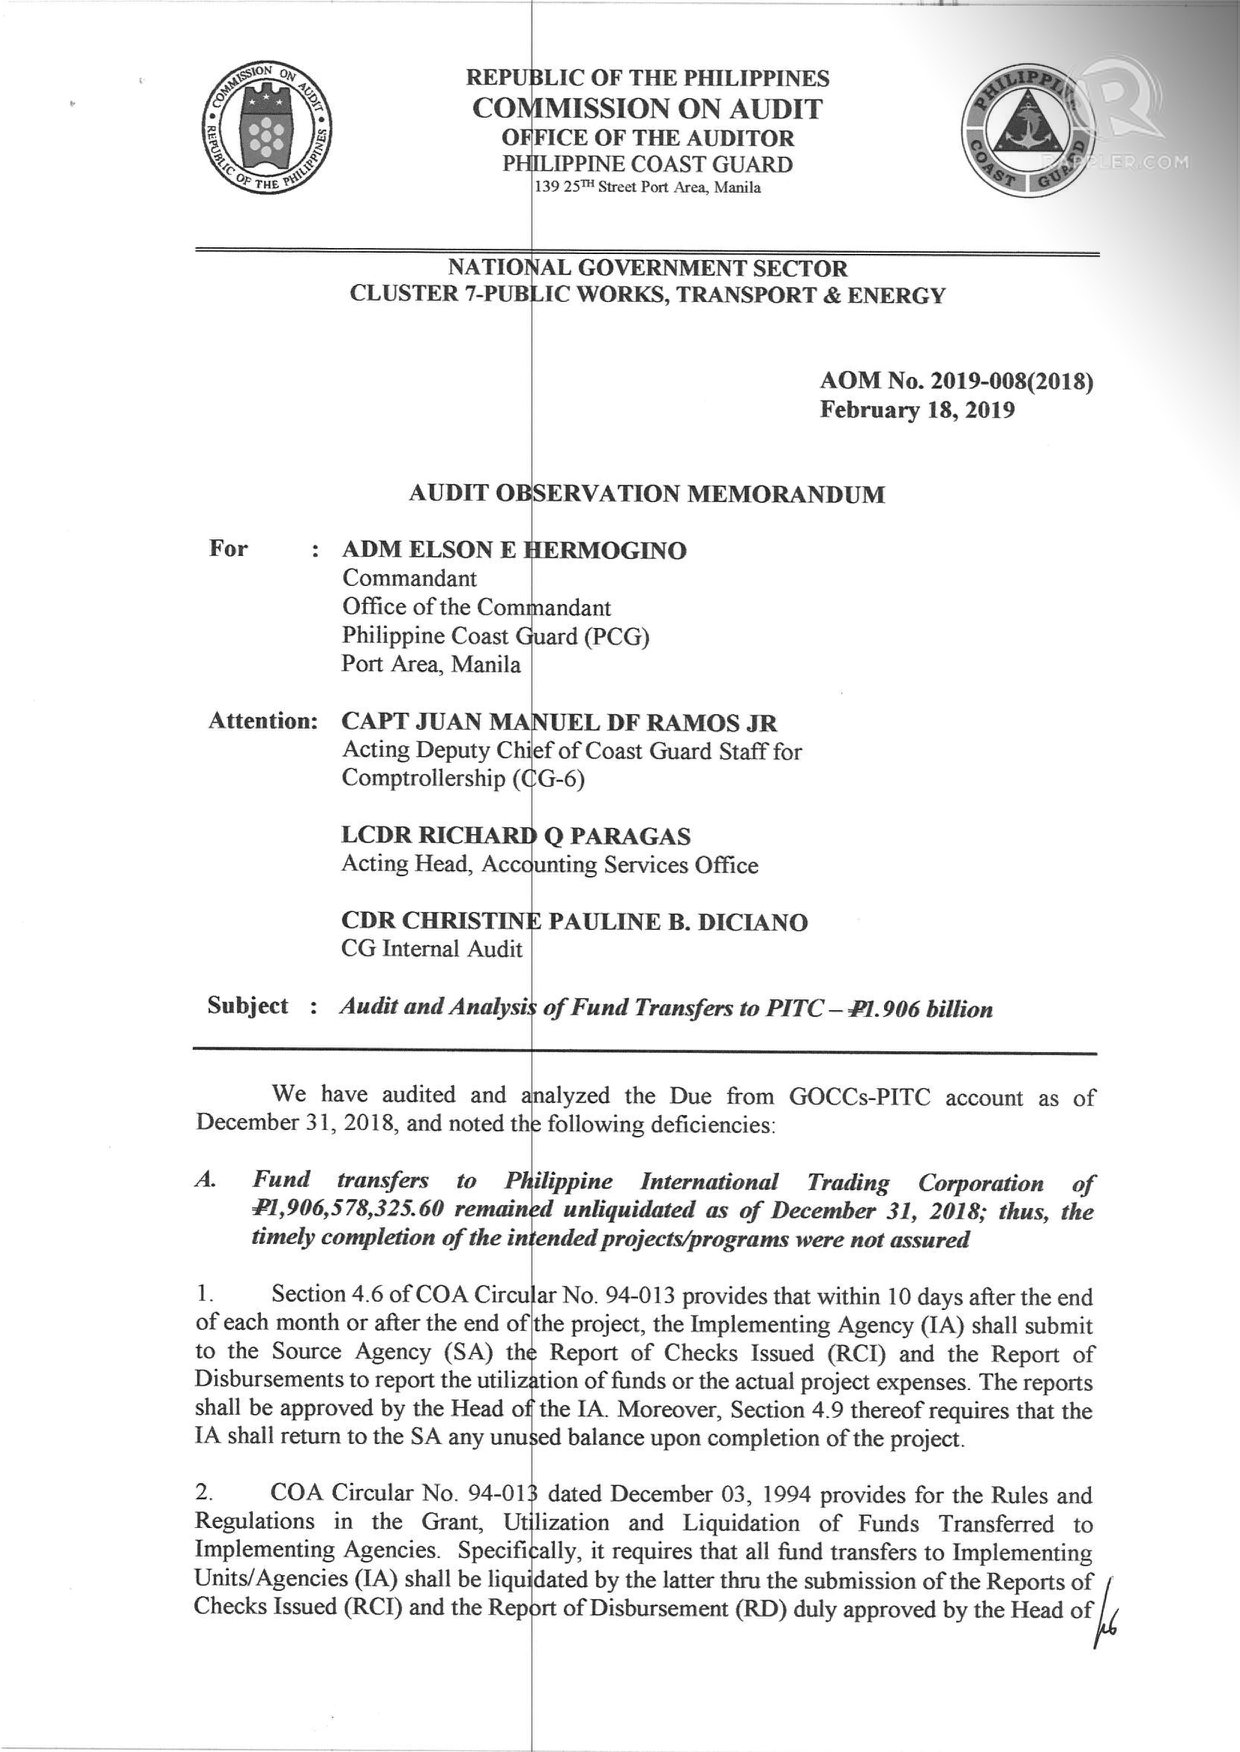 auditors-flag-p3-6b-in-philippine-coast-guard-transactions